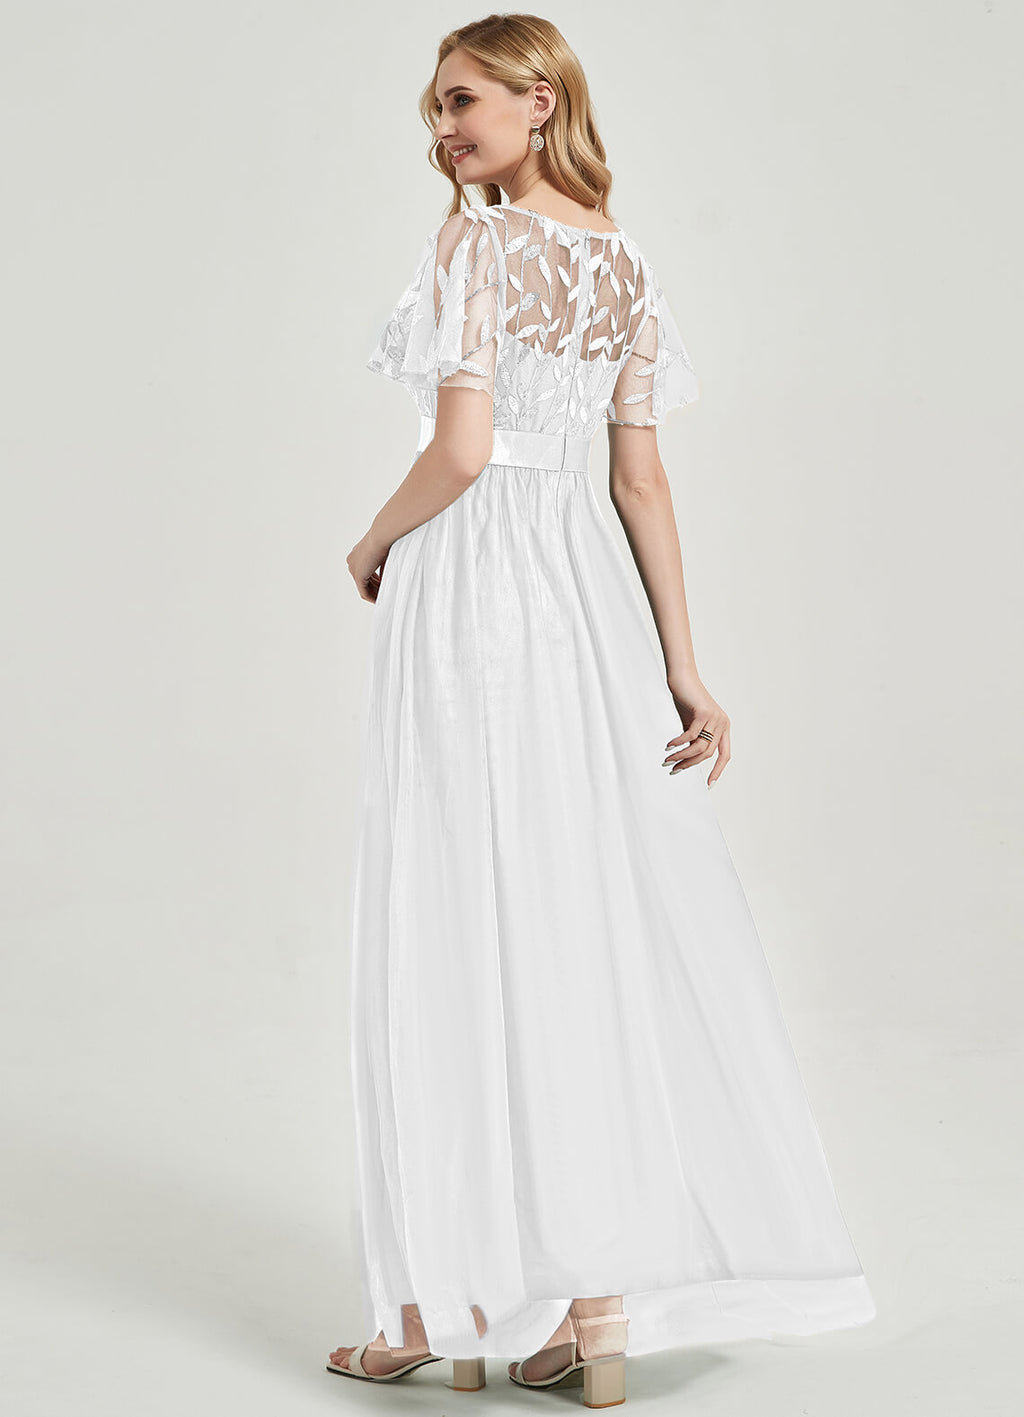 NZ Bridal White Sequin Tulle Sheer Flowy Prom Dress 00904EP Miyuki a